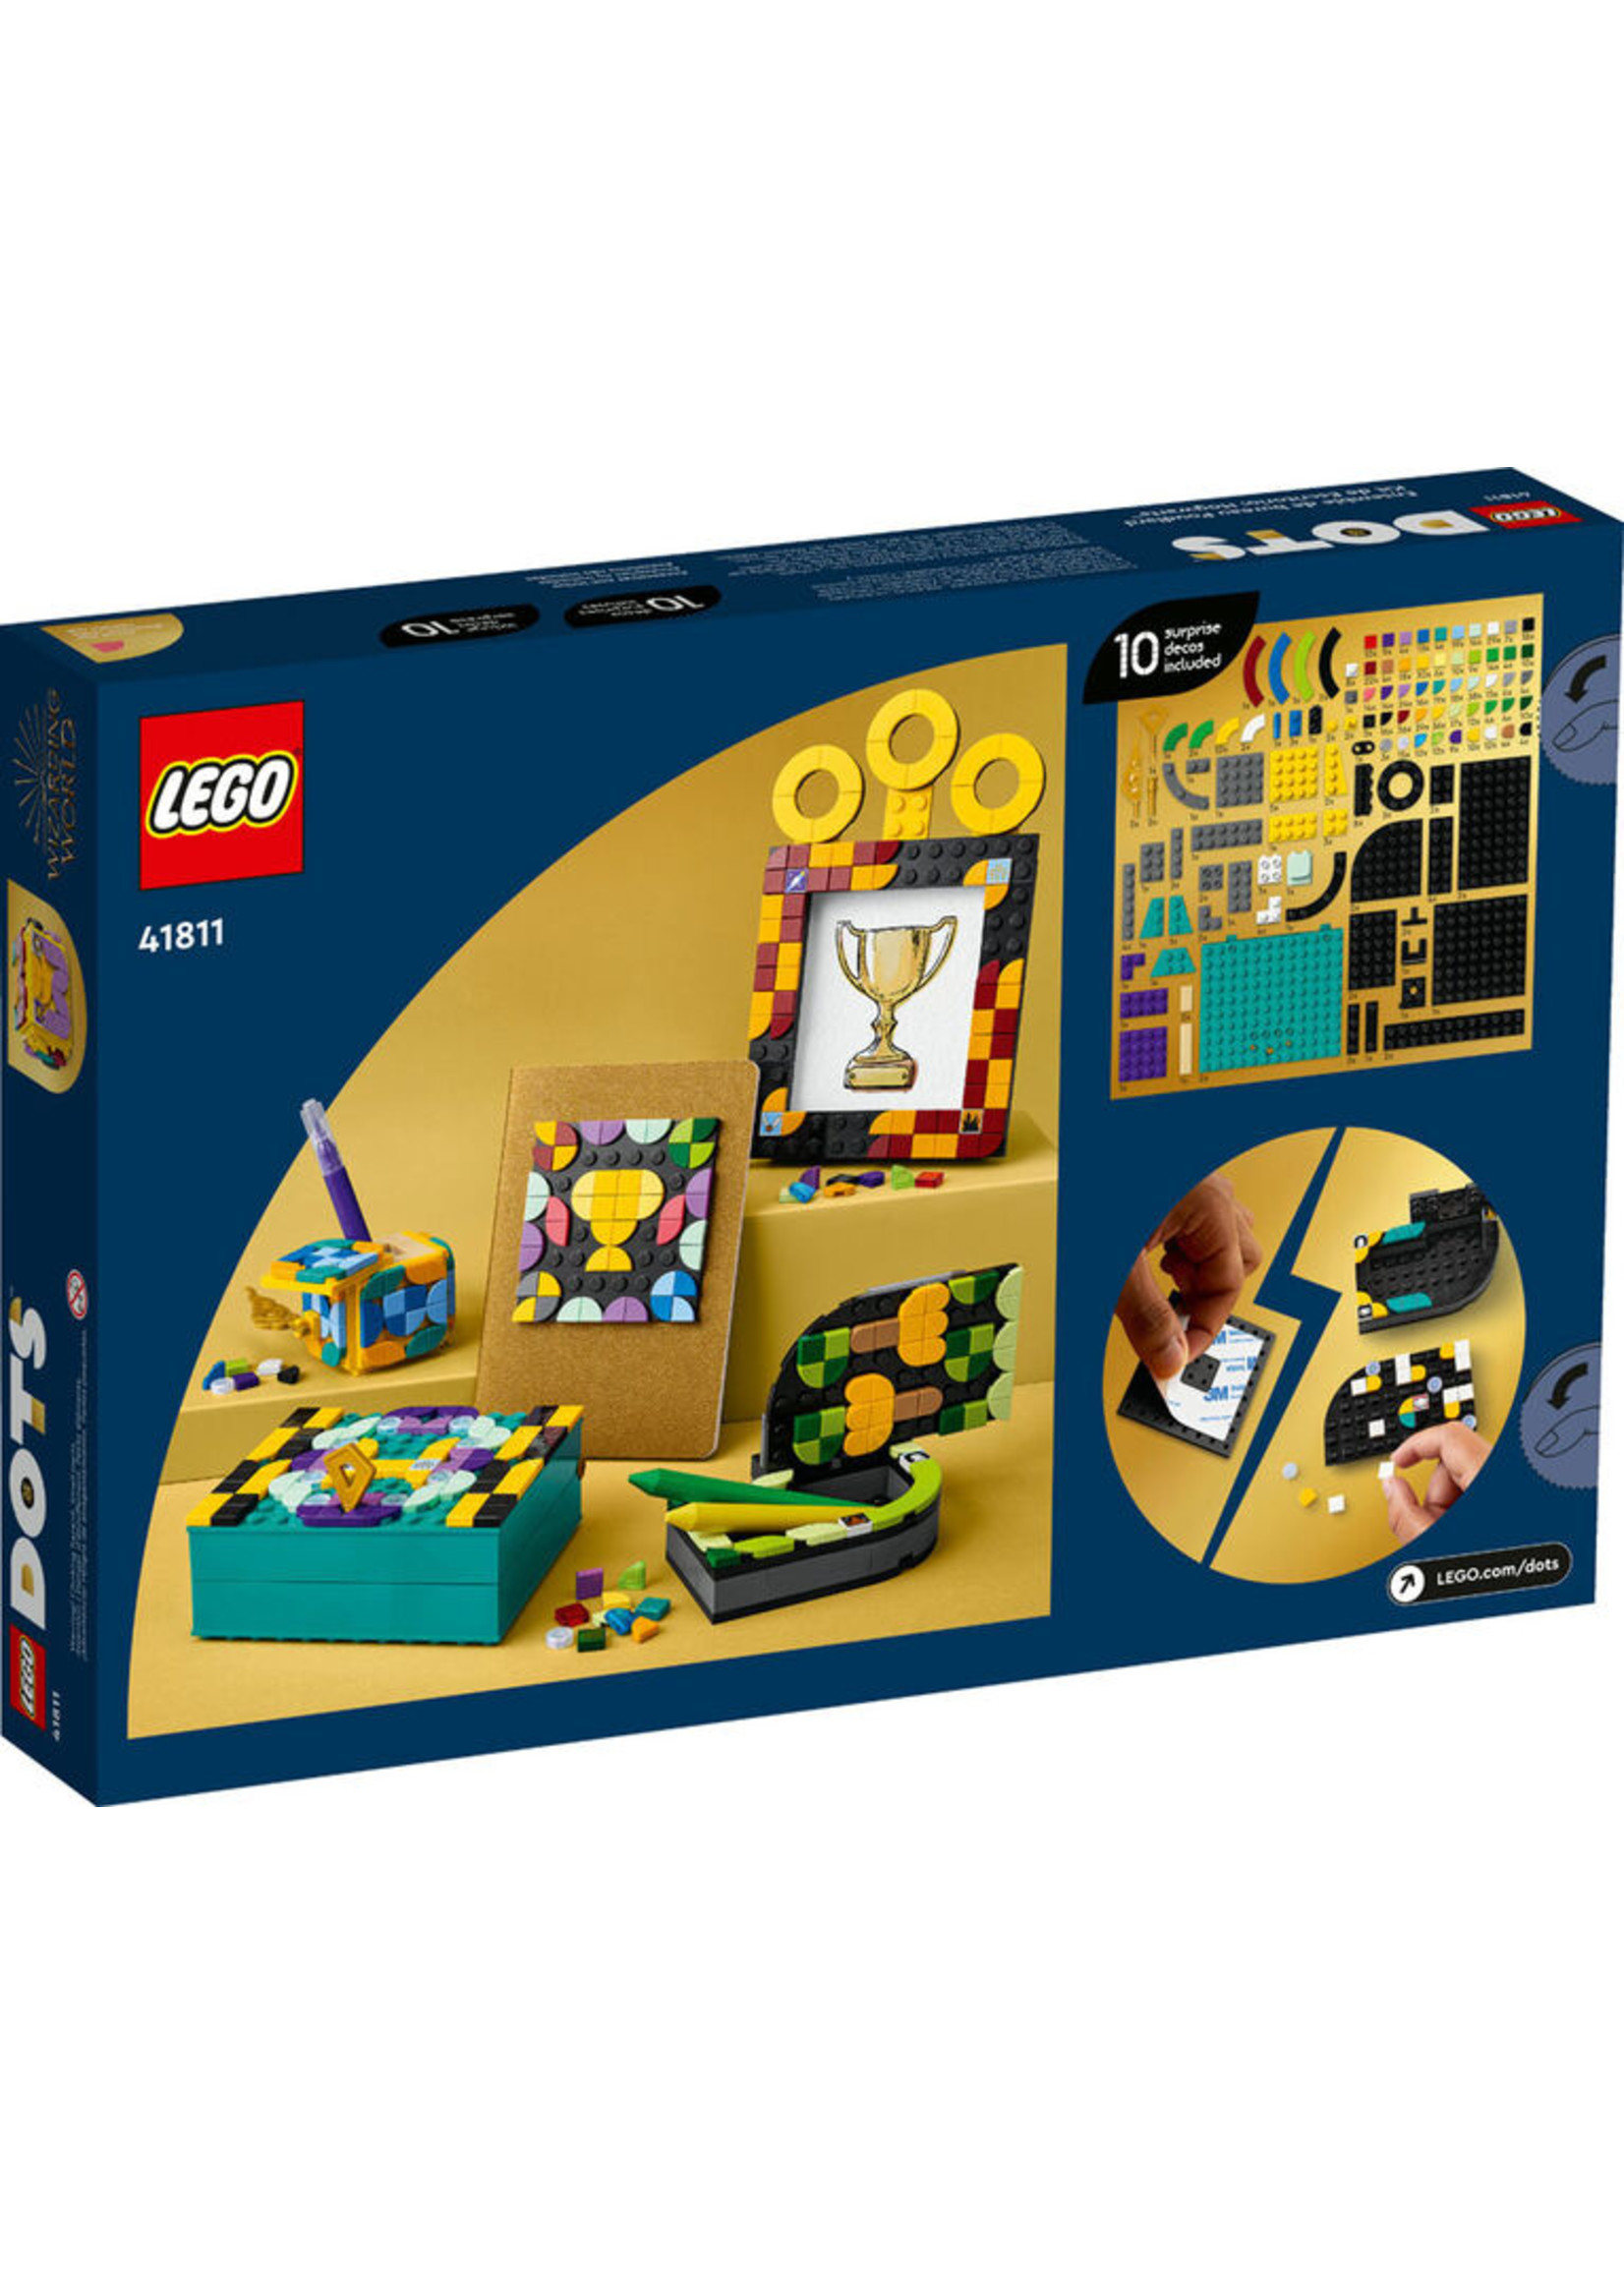 LEGO Dots - Hogwarts desktop kit